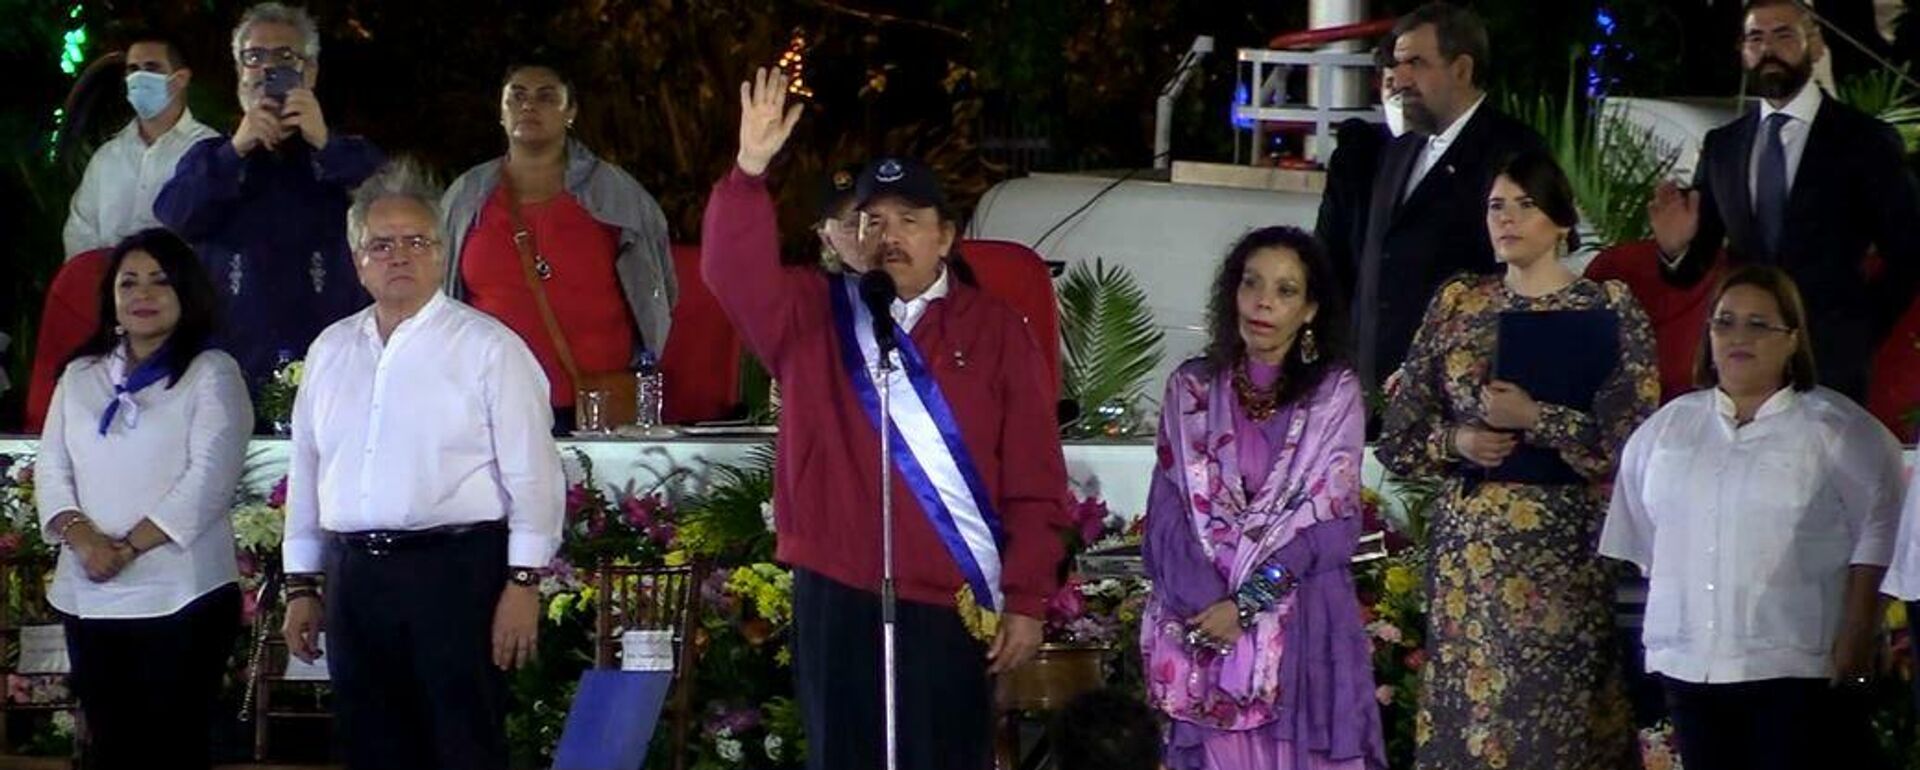 Daniel Ortega asume cuarto mandato consecutivo con nuevas alianzas   - Sputnik Mundo, 1920, 11.01.2022